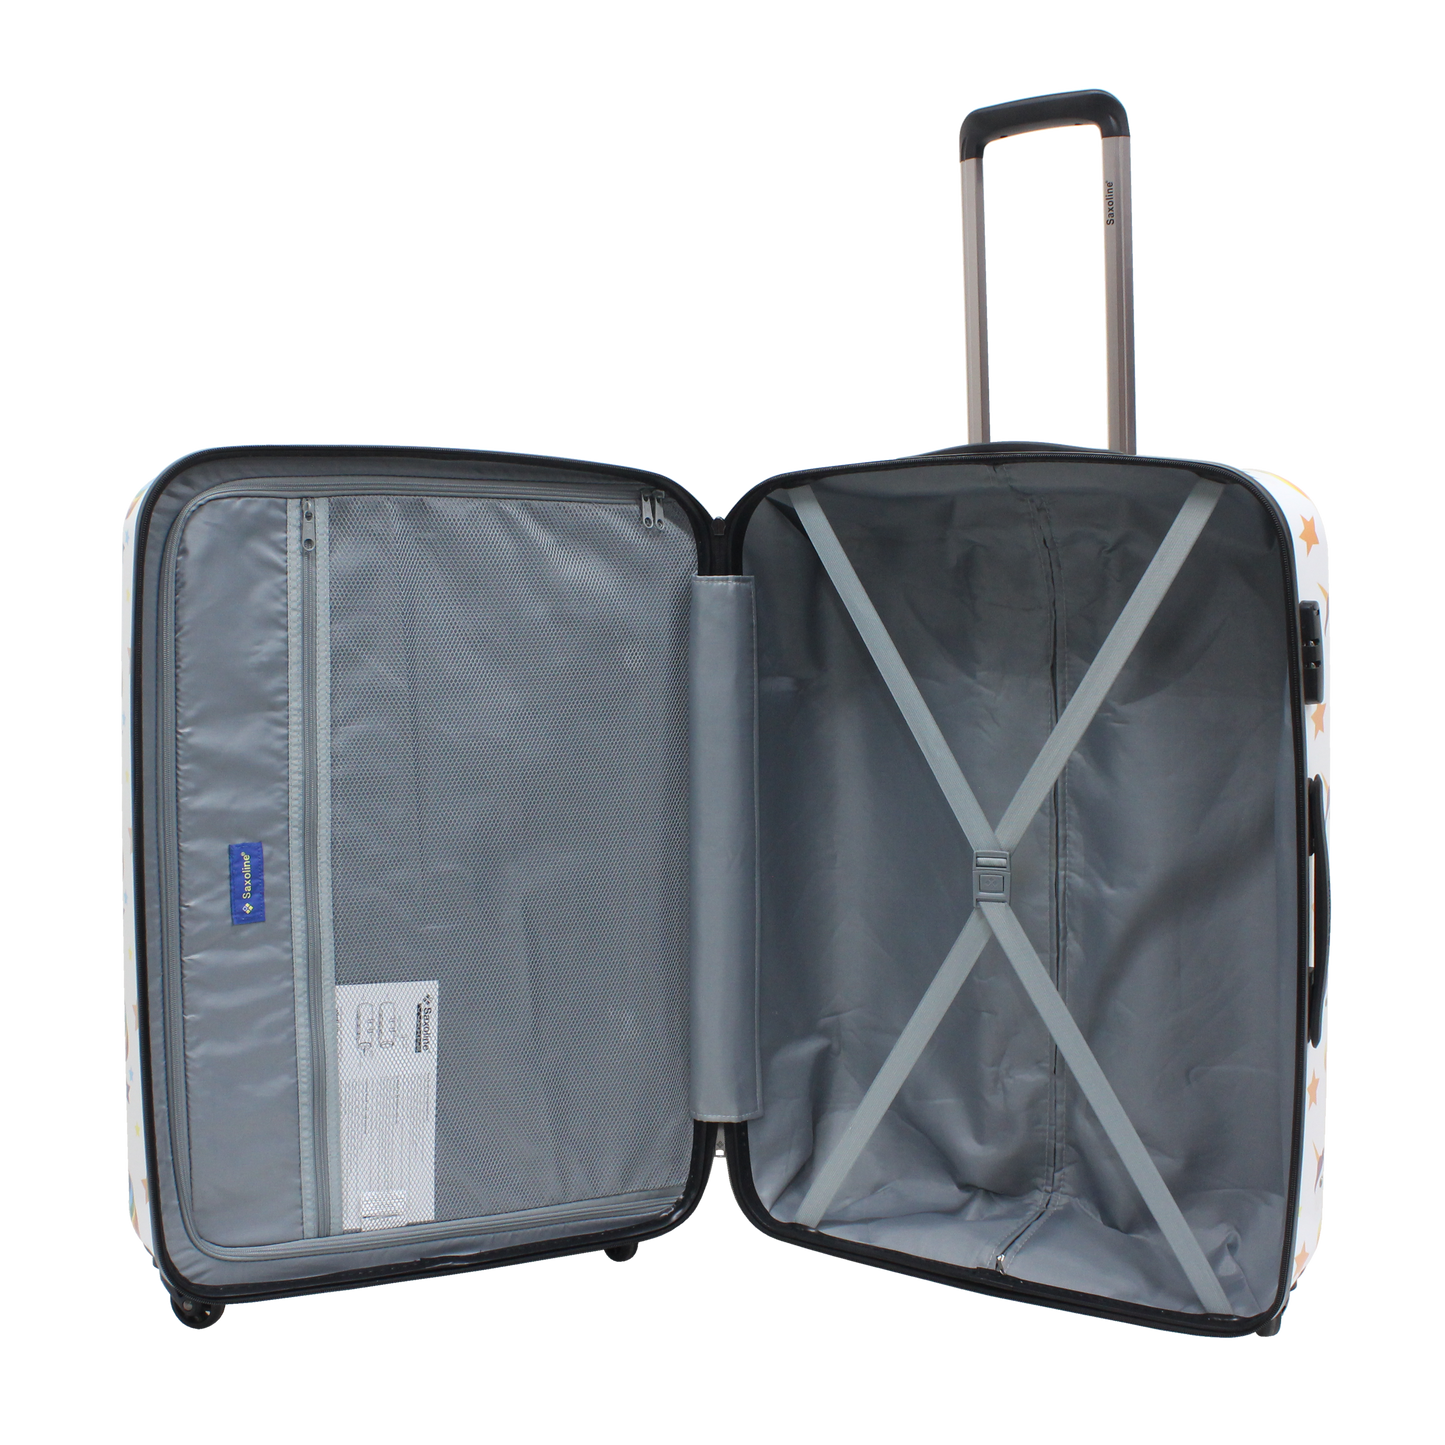 Saxoline Hard Case / Trolley / Travel Case - 76 cm (Large) - Imprimé Licorne